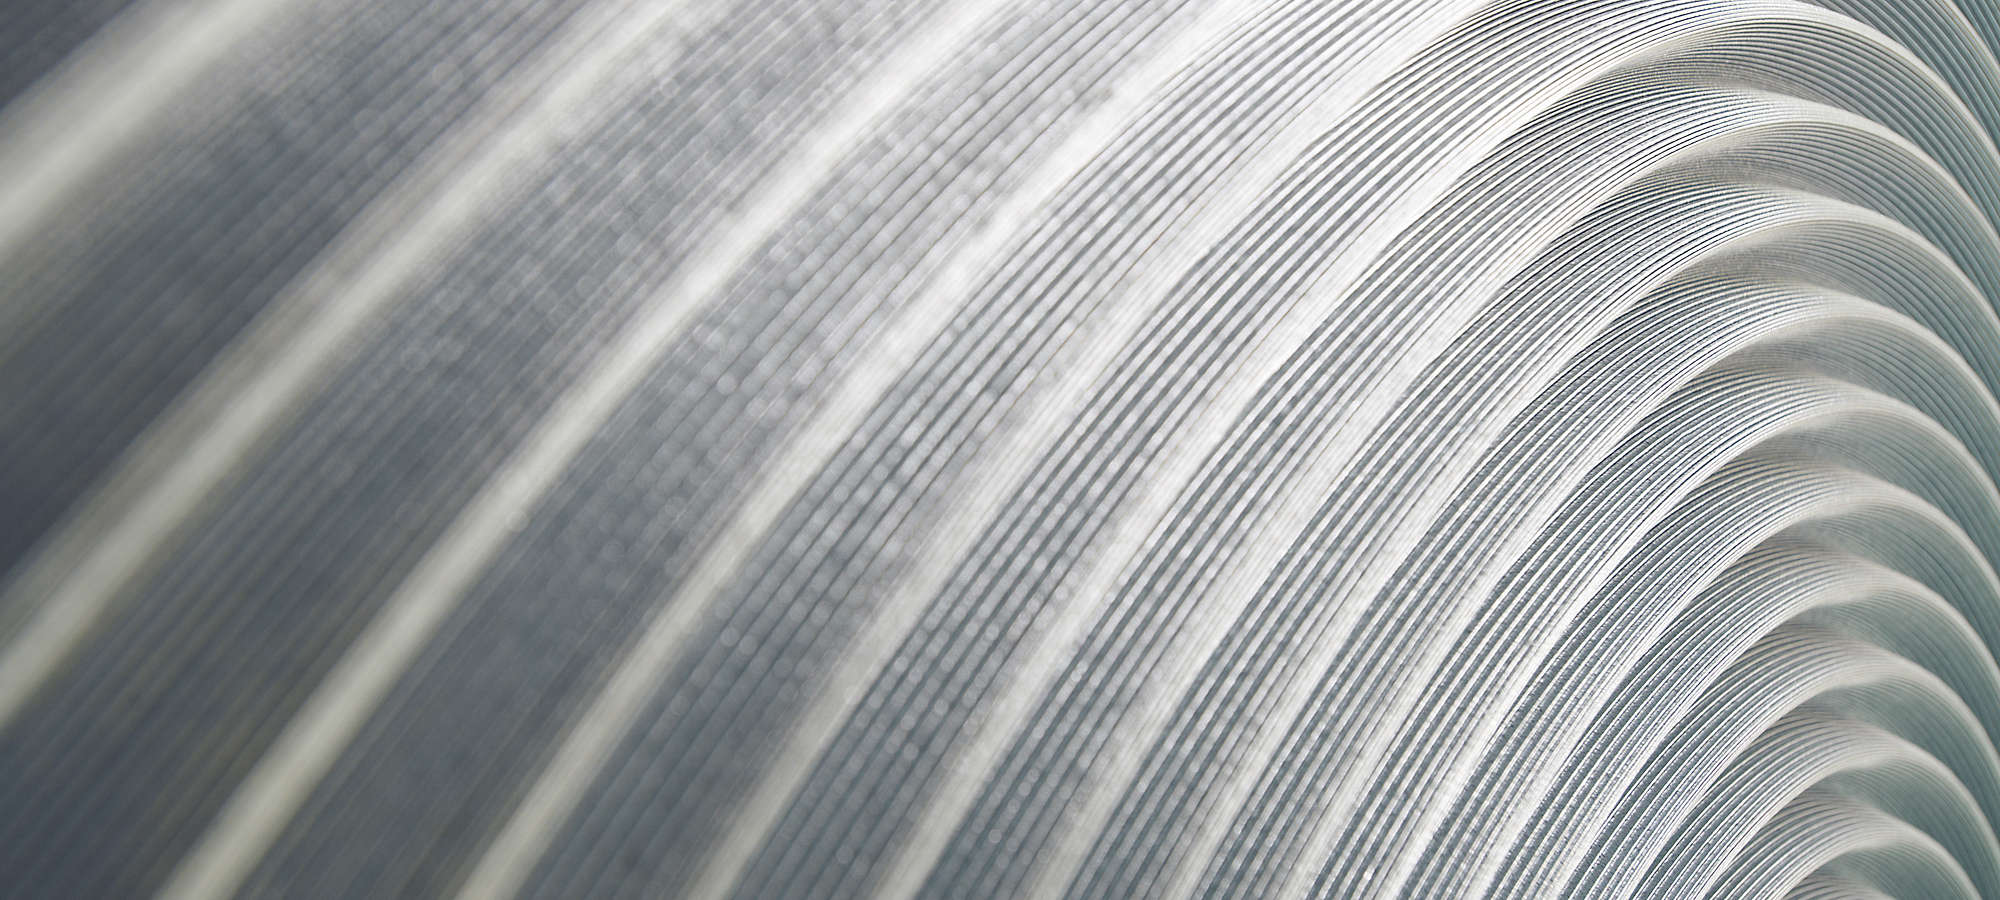 Steel coil detail